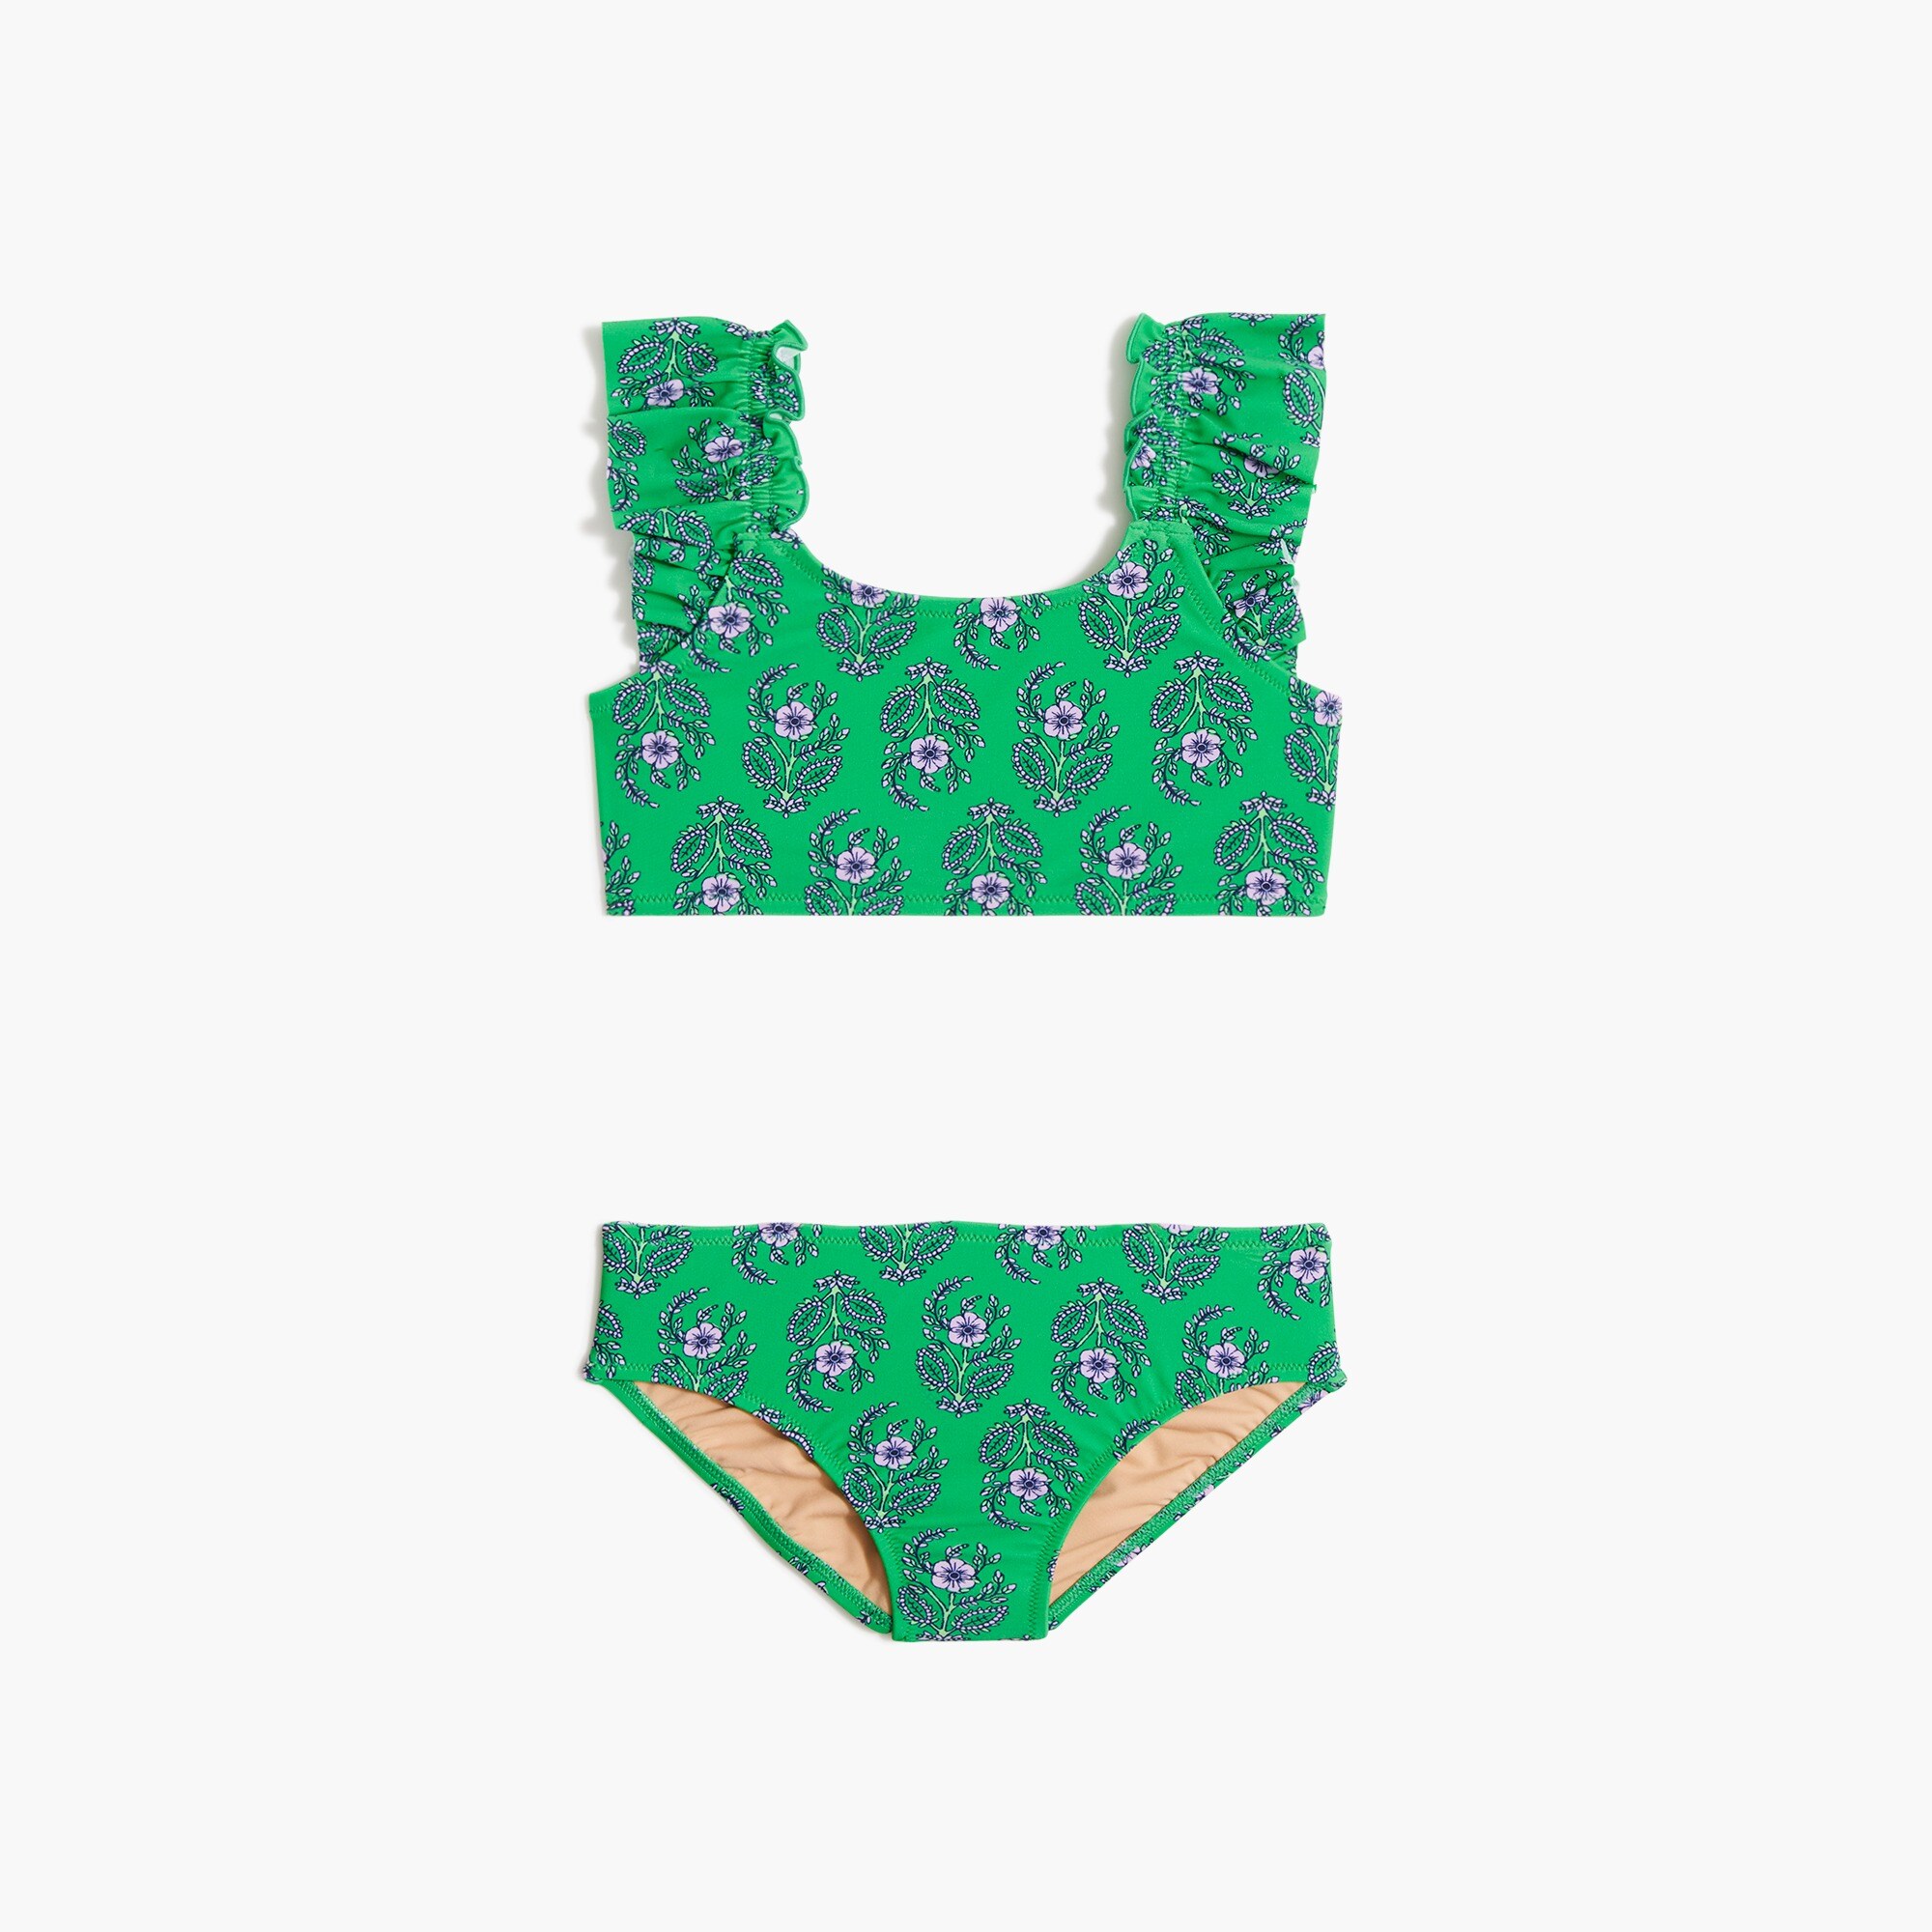  Girls' printed ruffle-strap bikini set